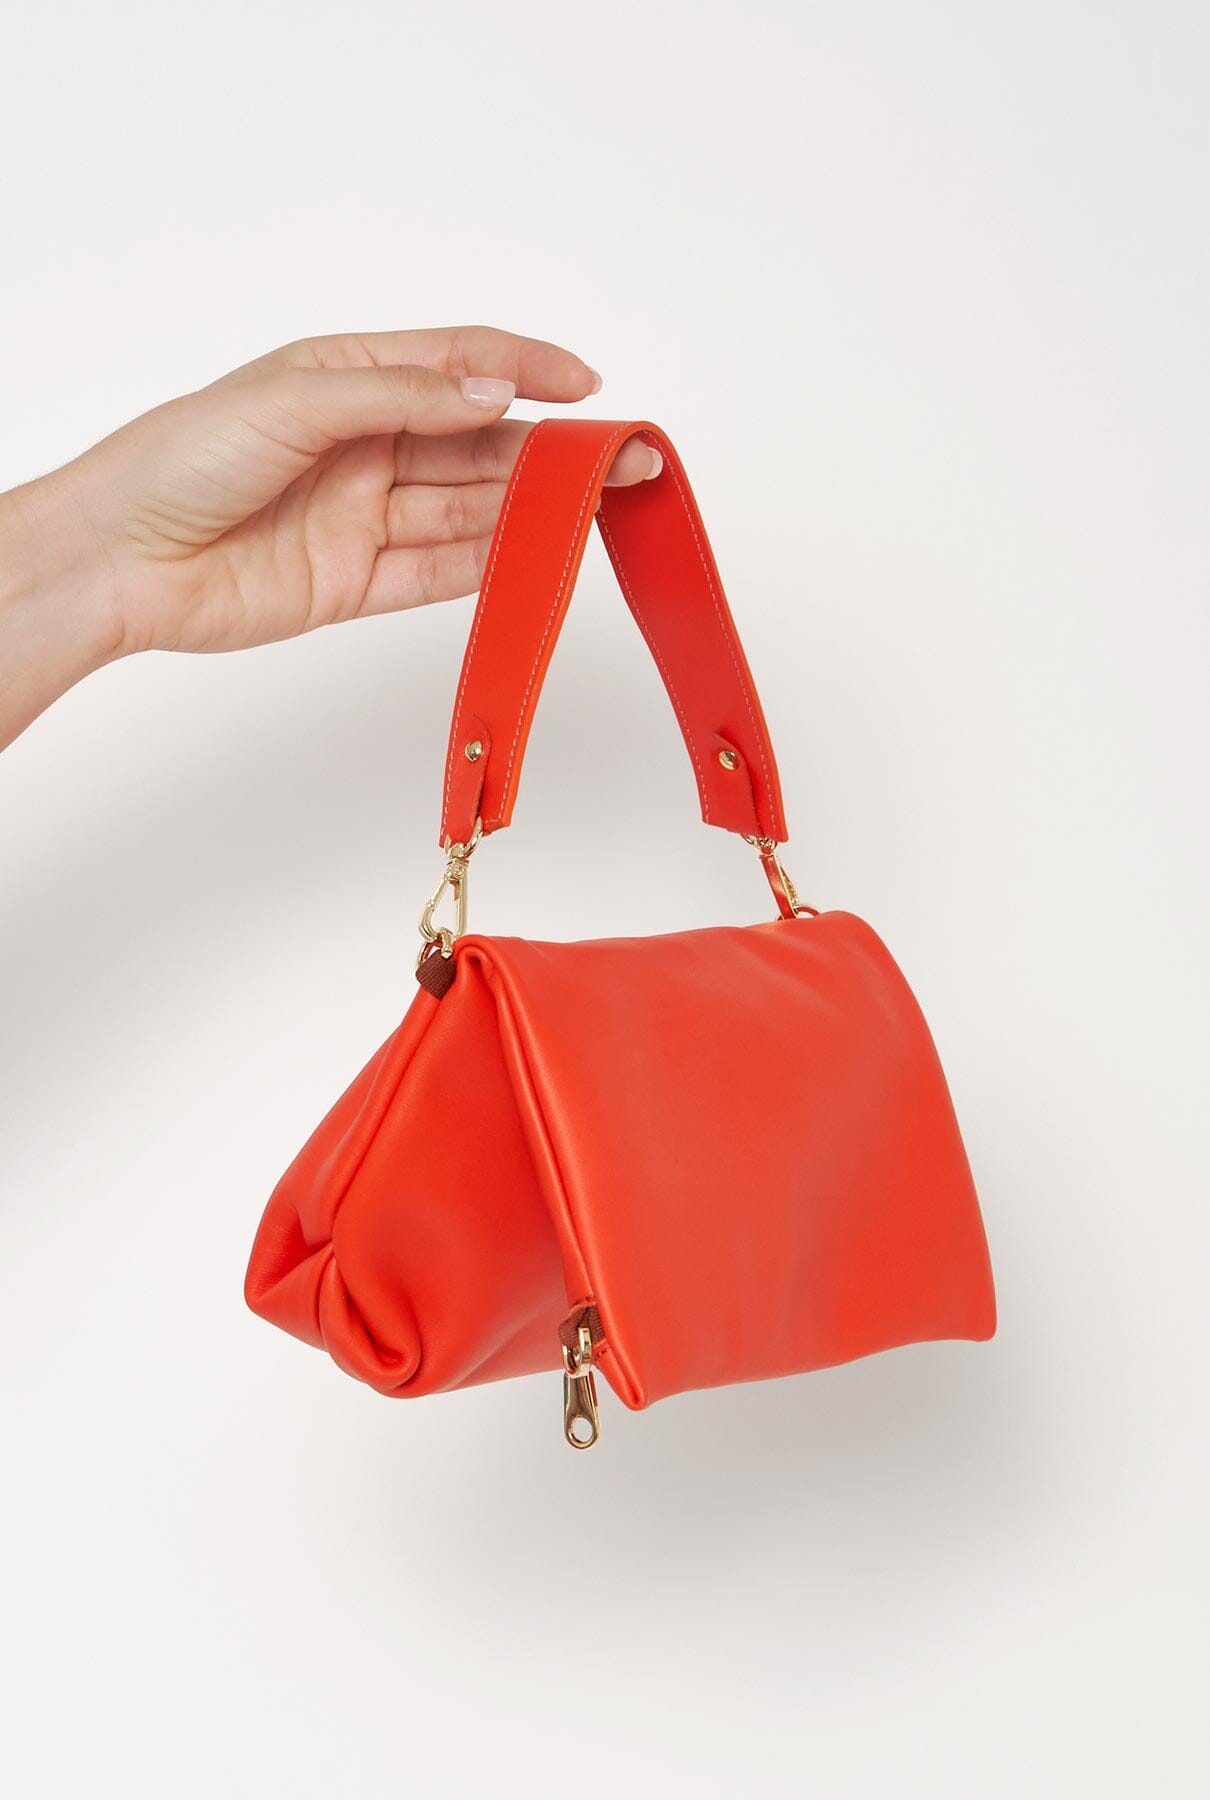 The Lucia Bag Naranja Hand bags The Bag Lab 